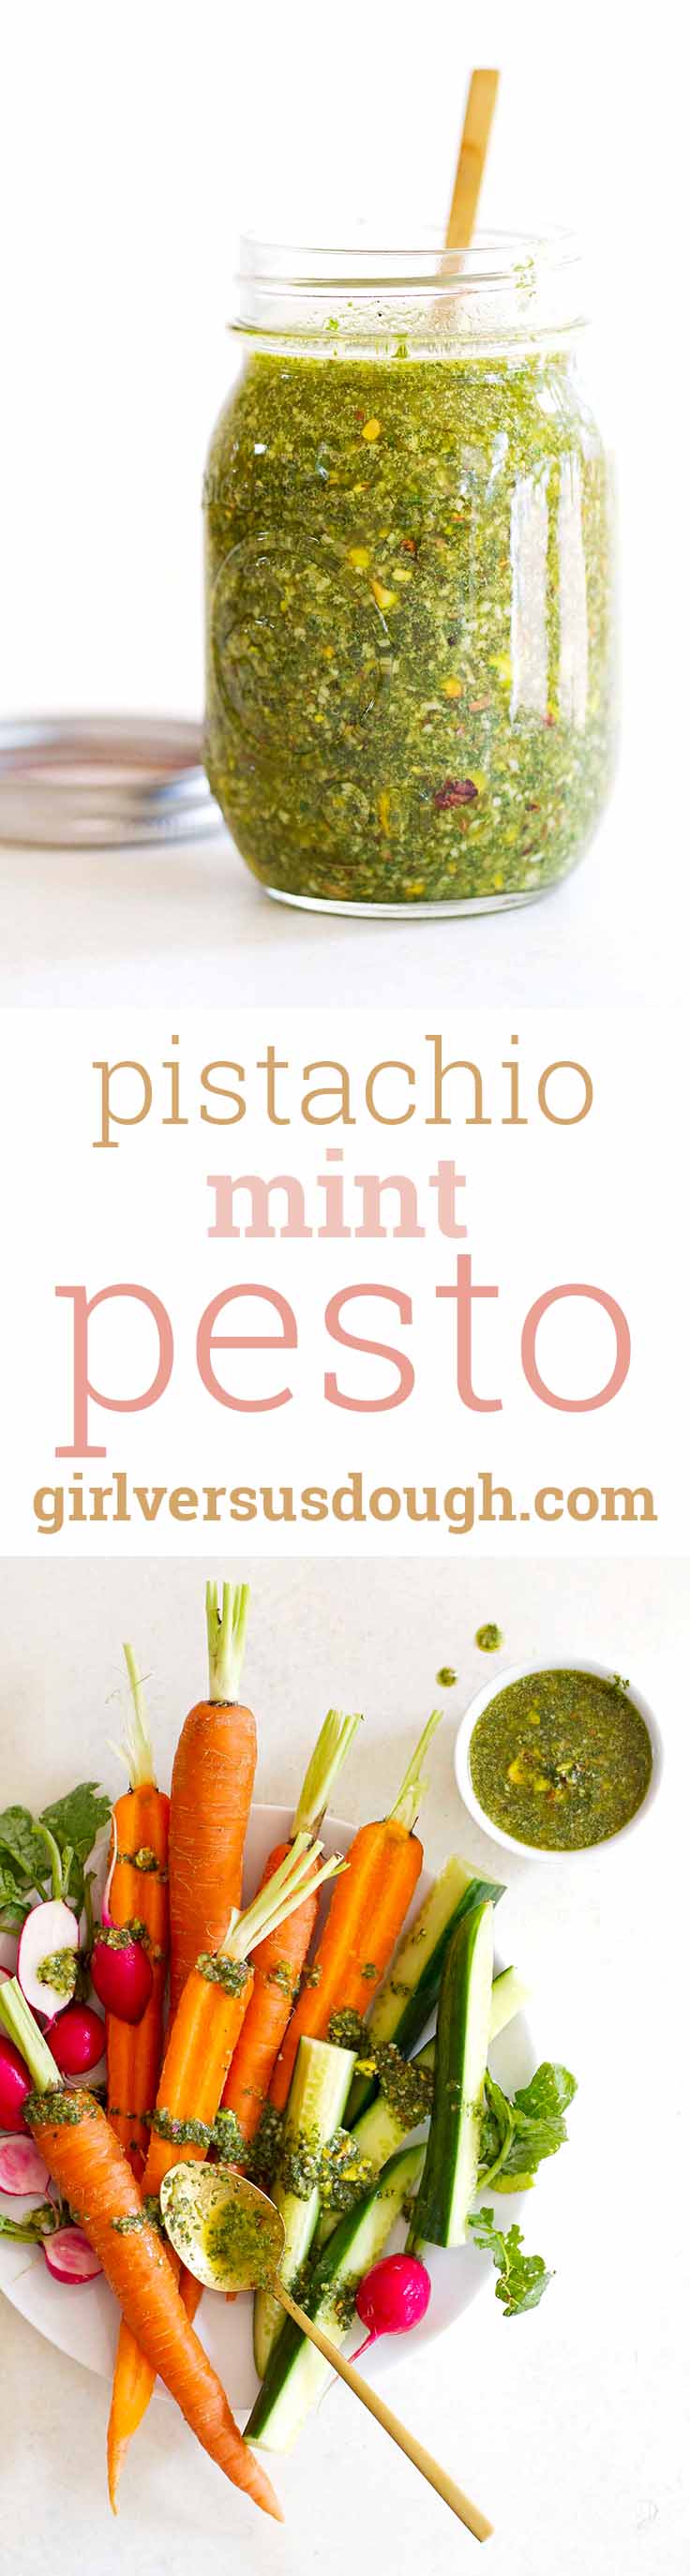 Pistachio Mint Pesto -- easy and versatile homemade pesto. Get ready to spoon this on everything! girlversusdough.com @girlversusdough